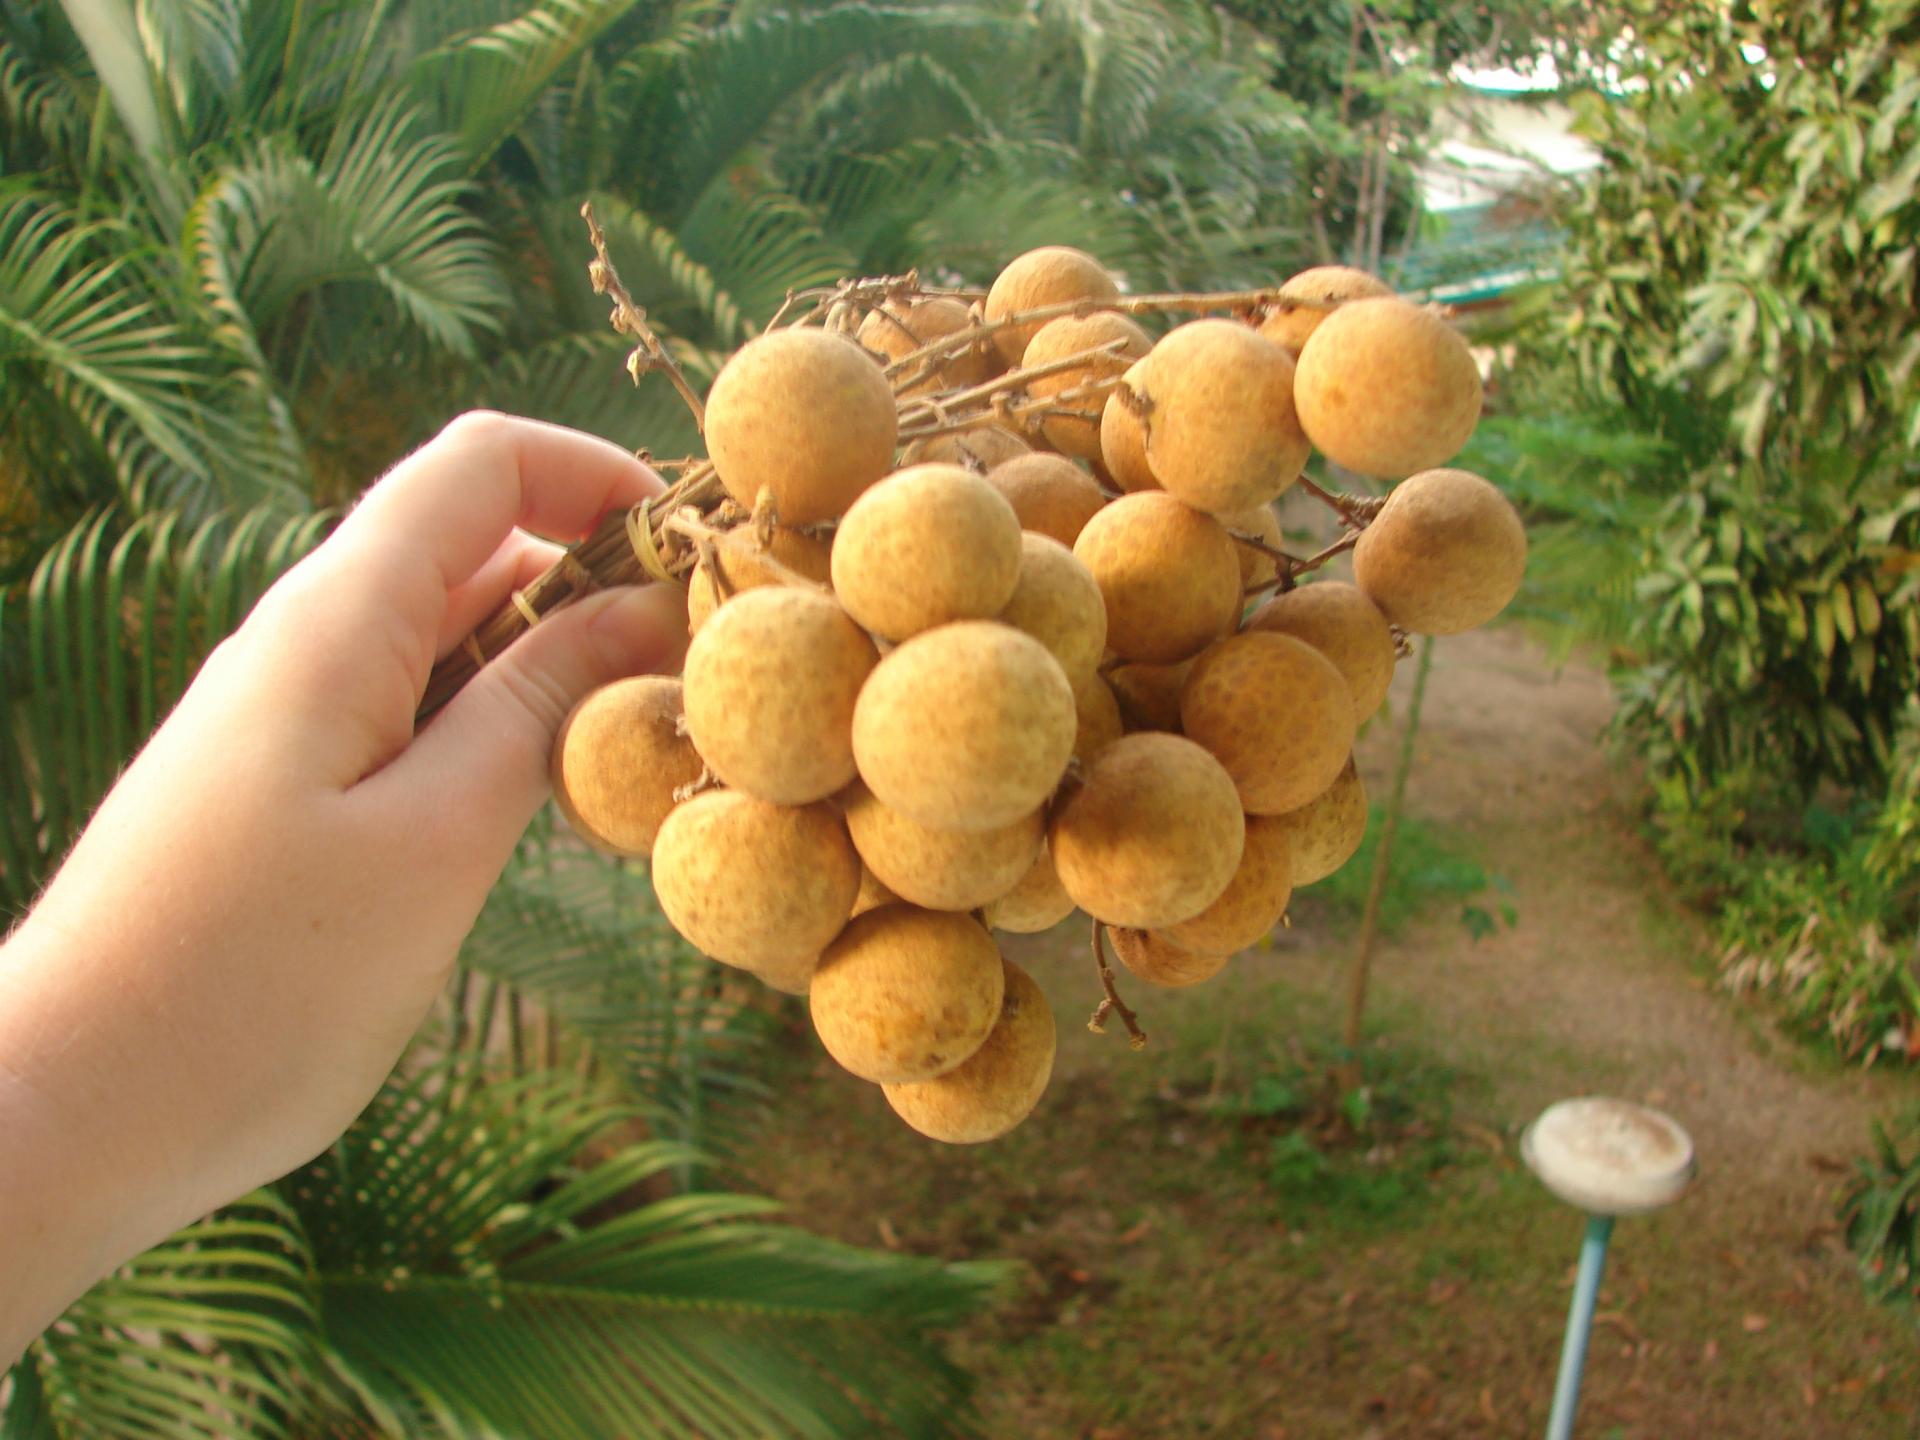 Thailand's fruit